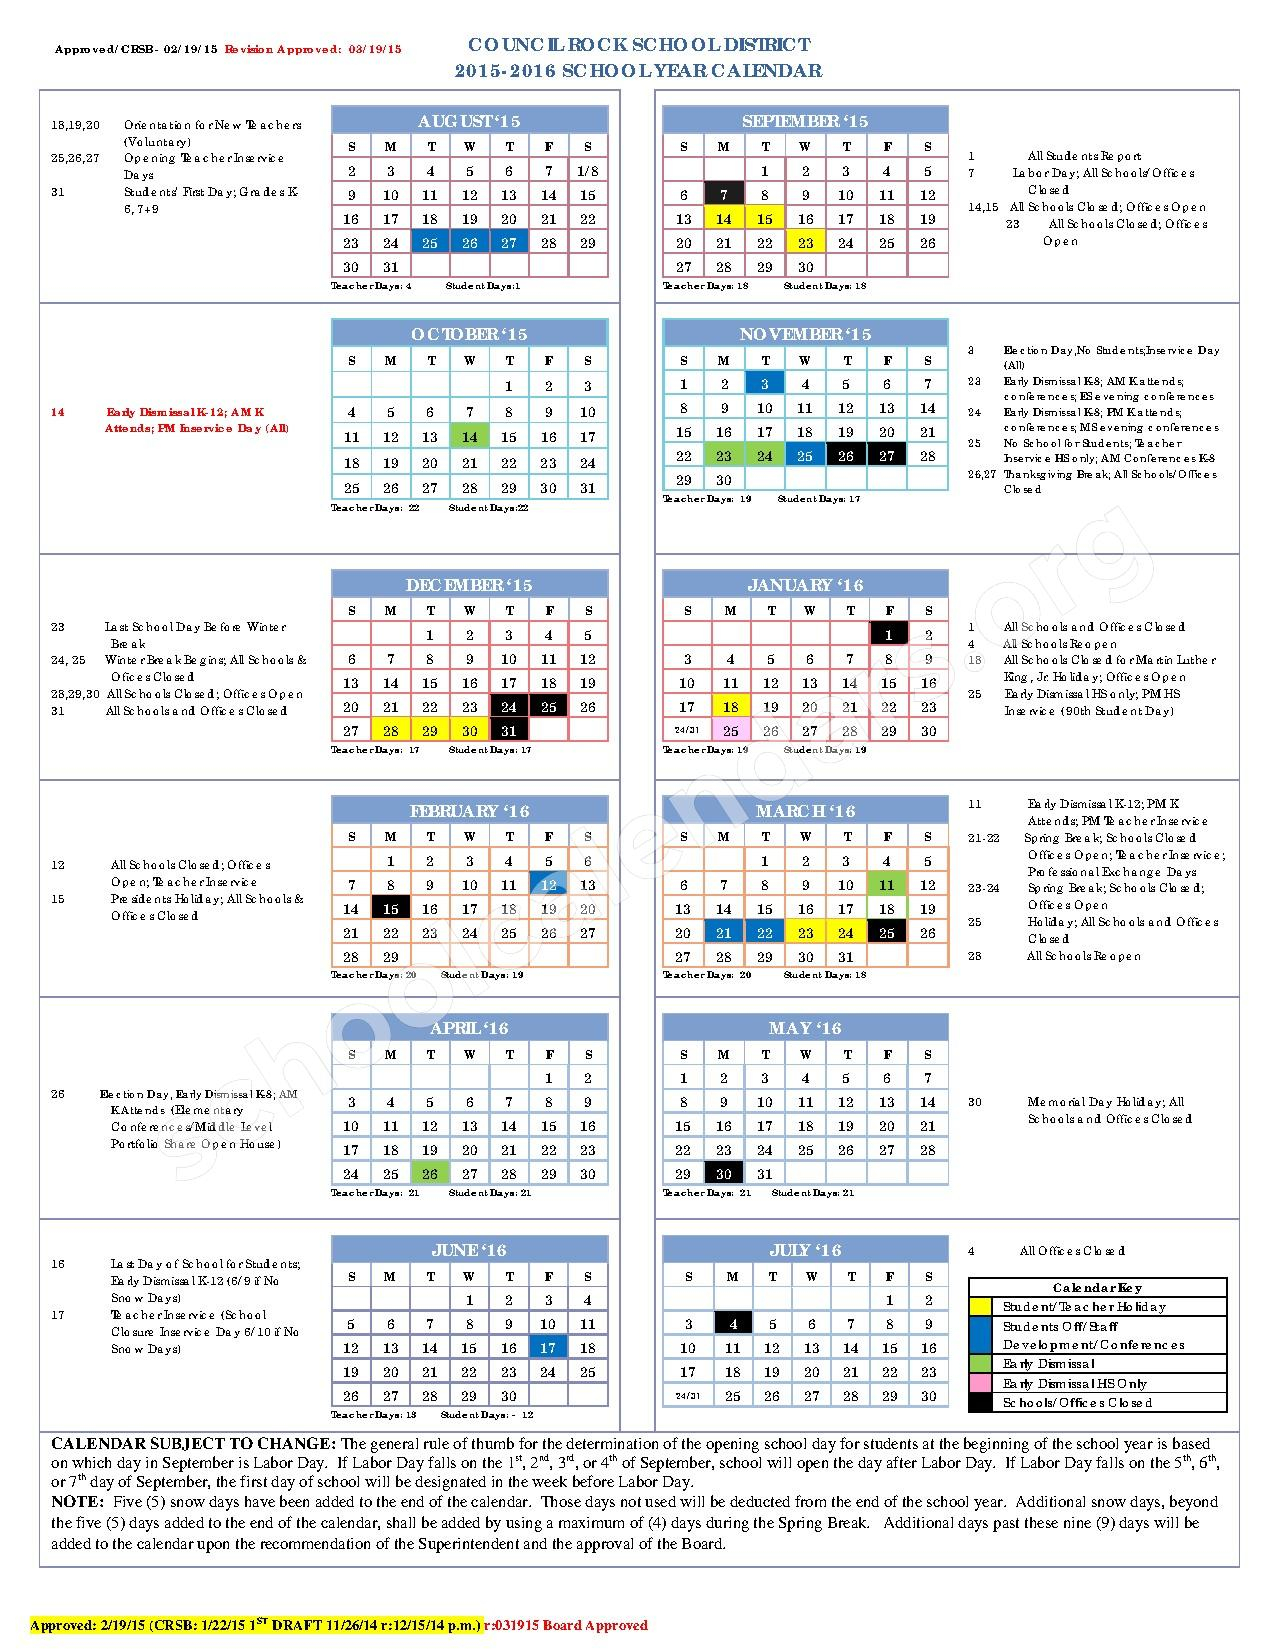 newtown-public-schools-calendar-2024-schoolcalendars